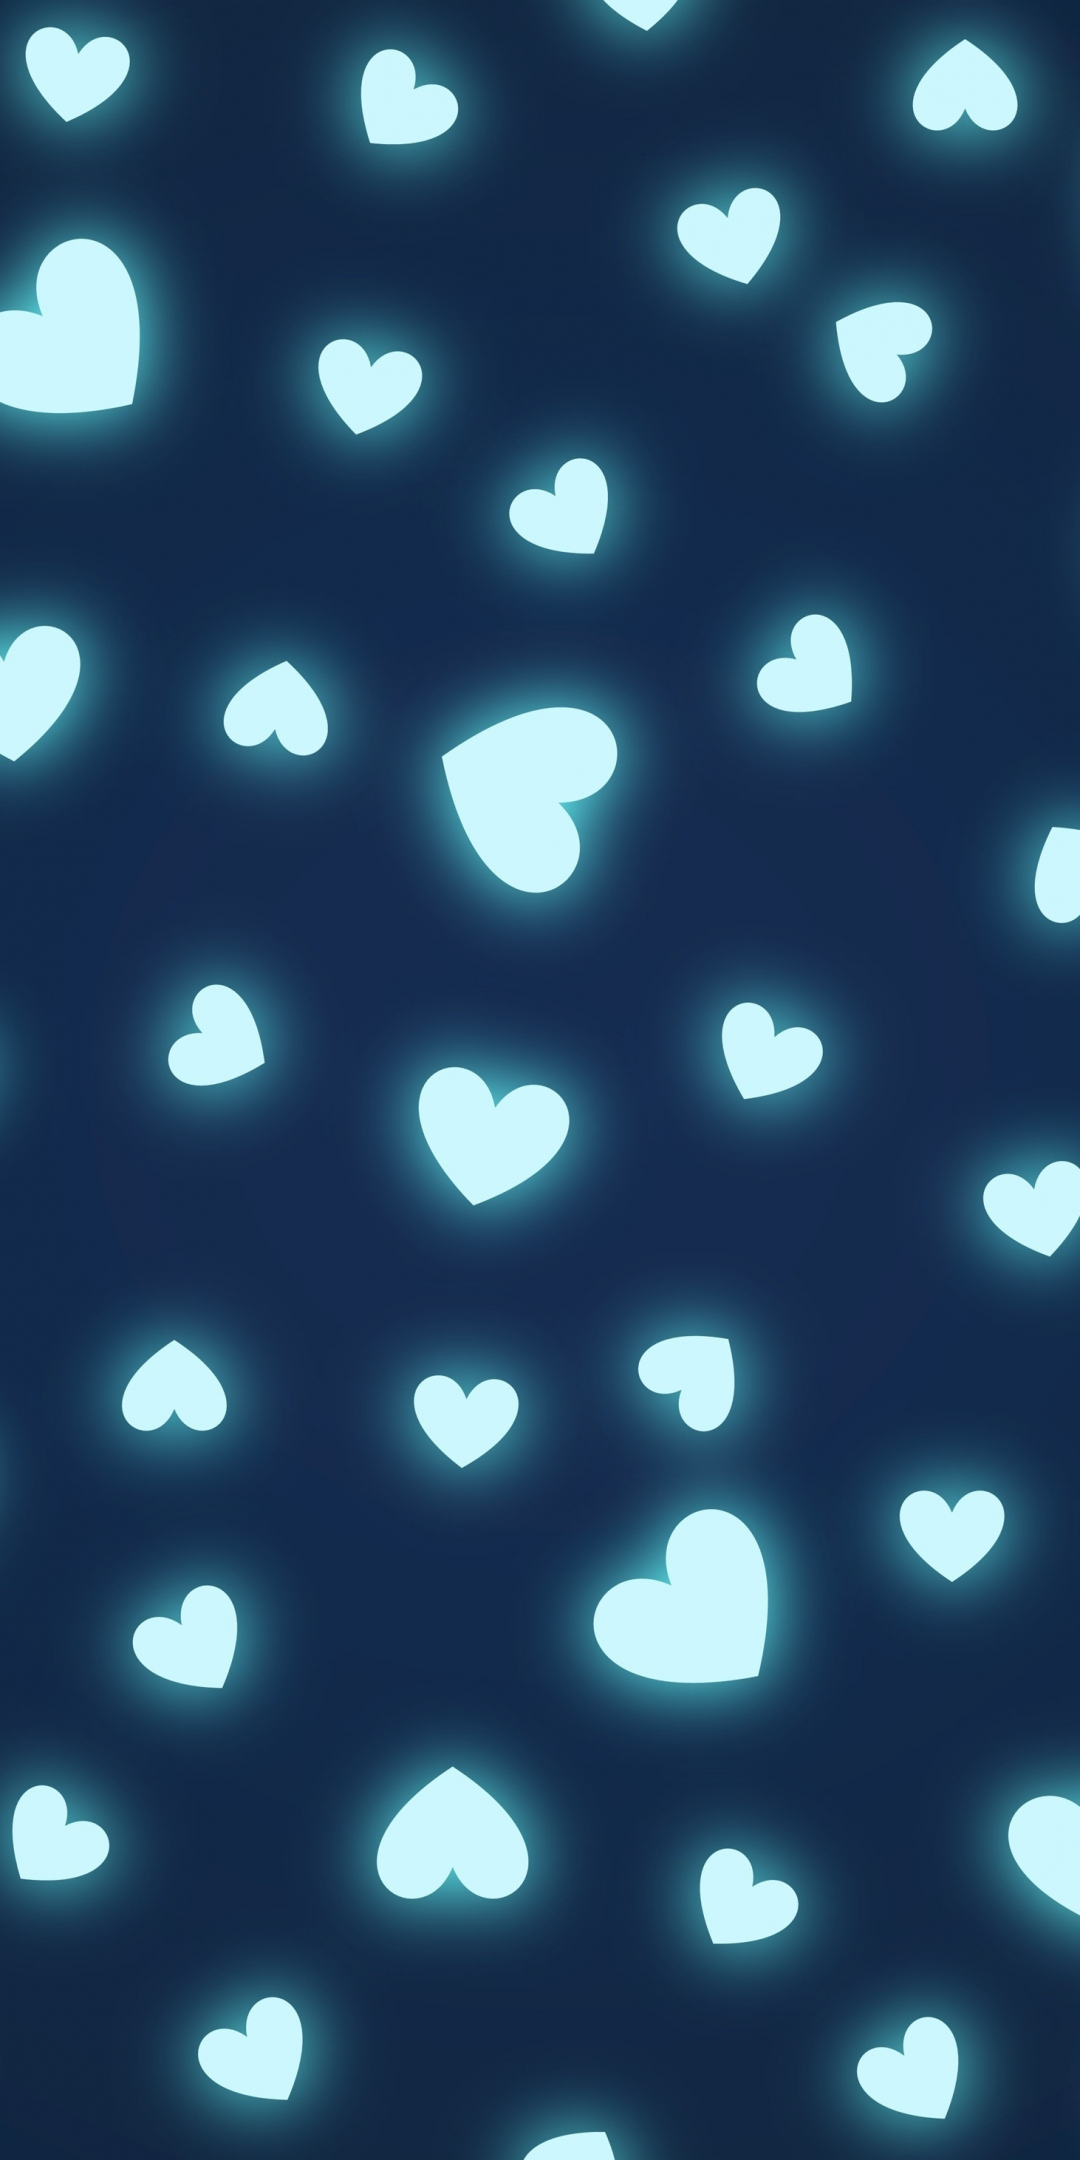 Hearts, shapes, glowing, minimal, pattern, 1080x2160 wallpaper